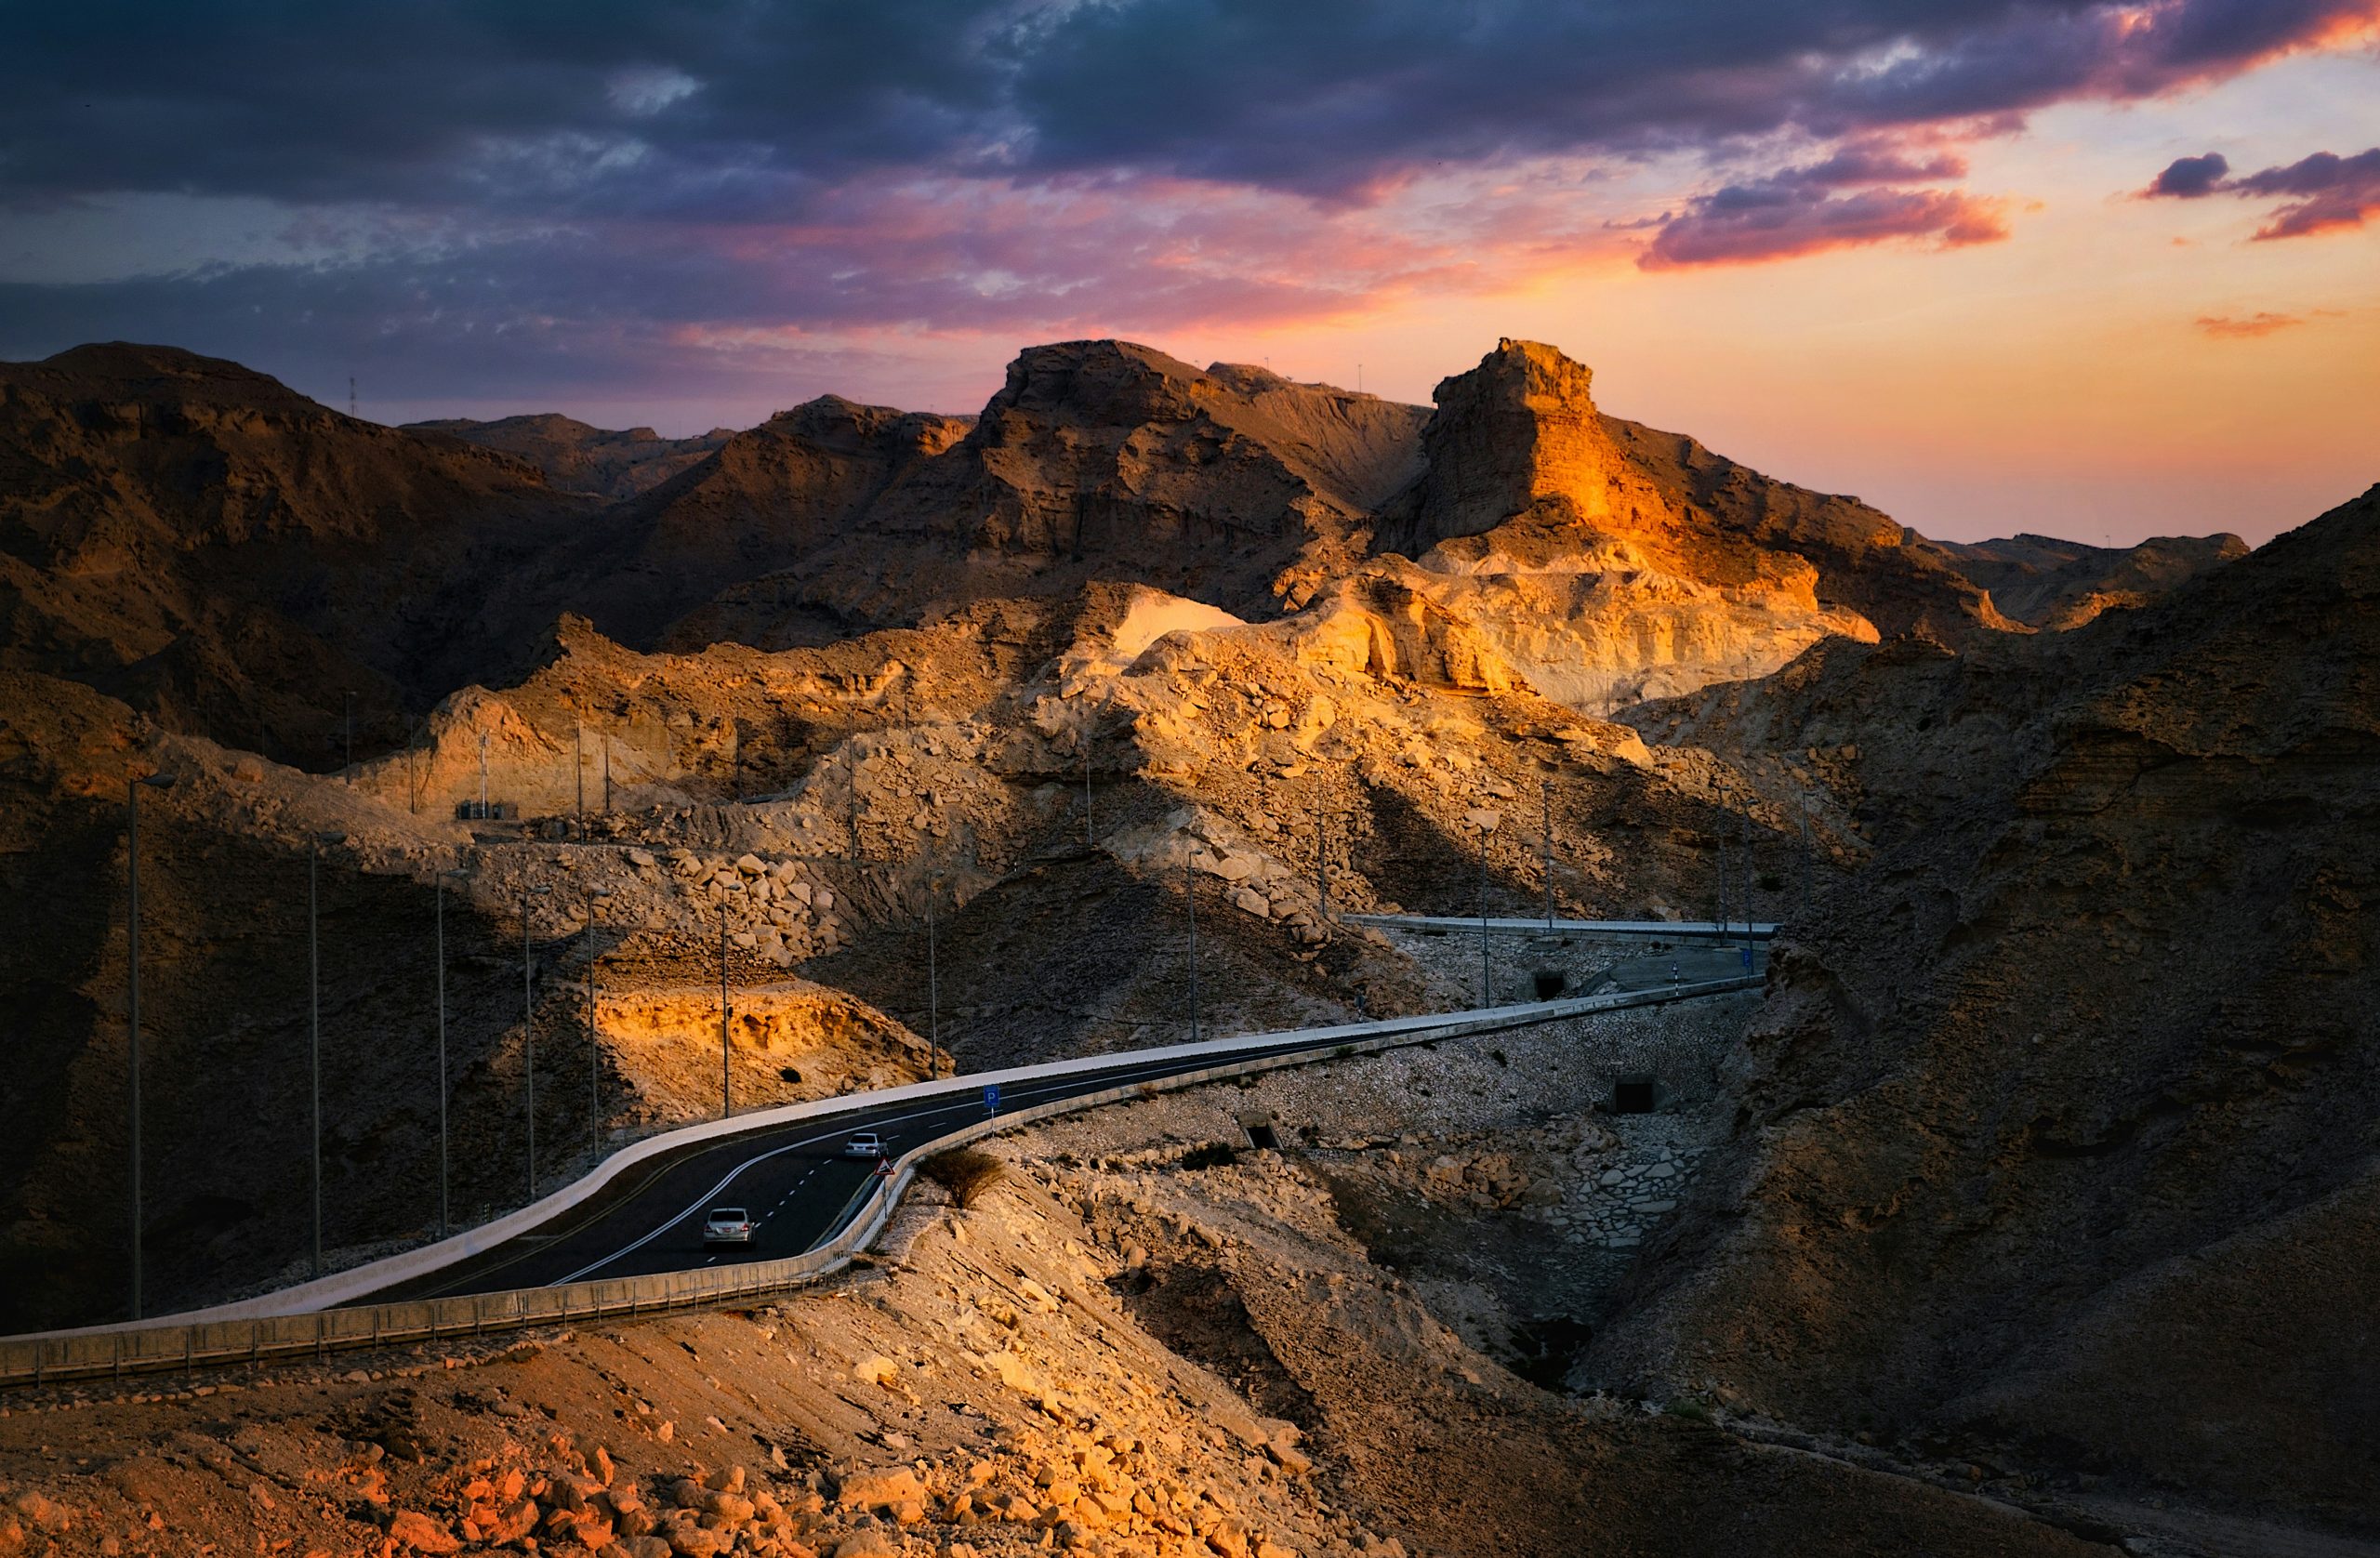 Desert and road